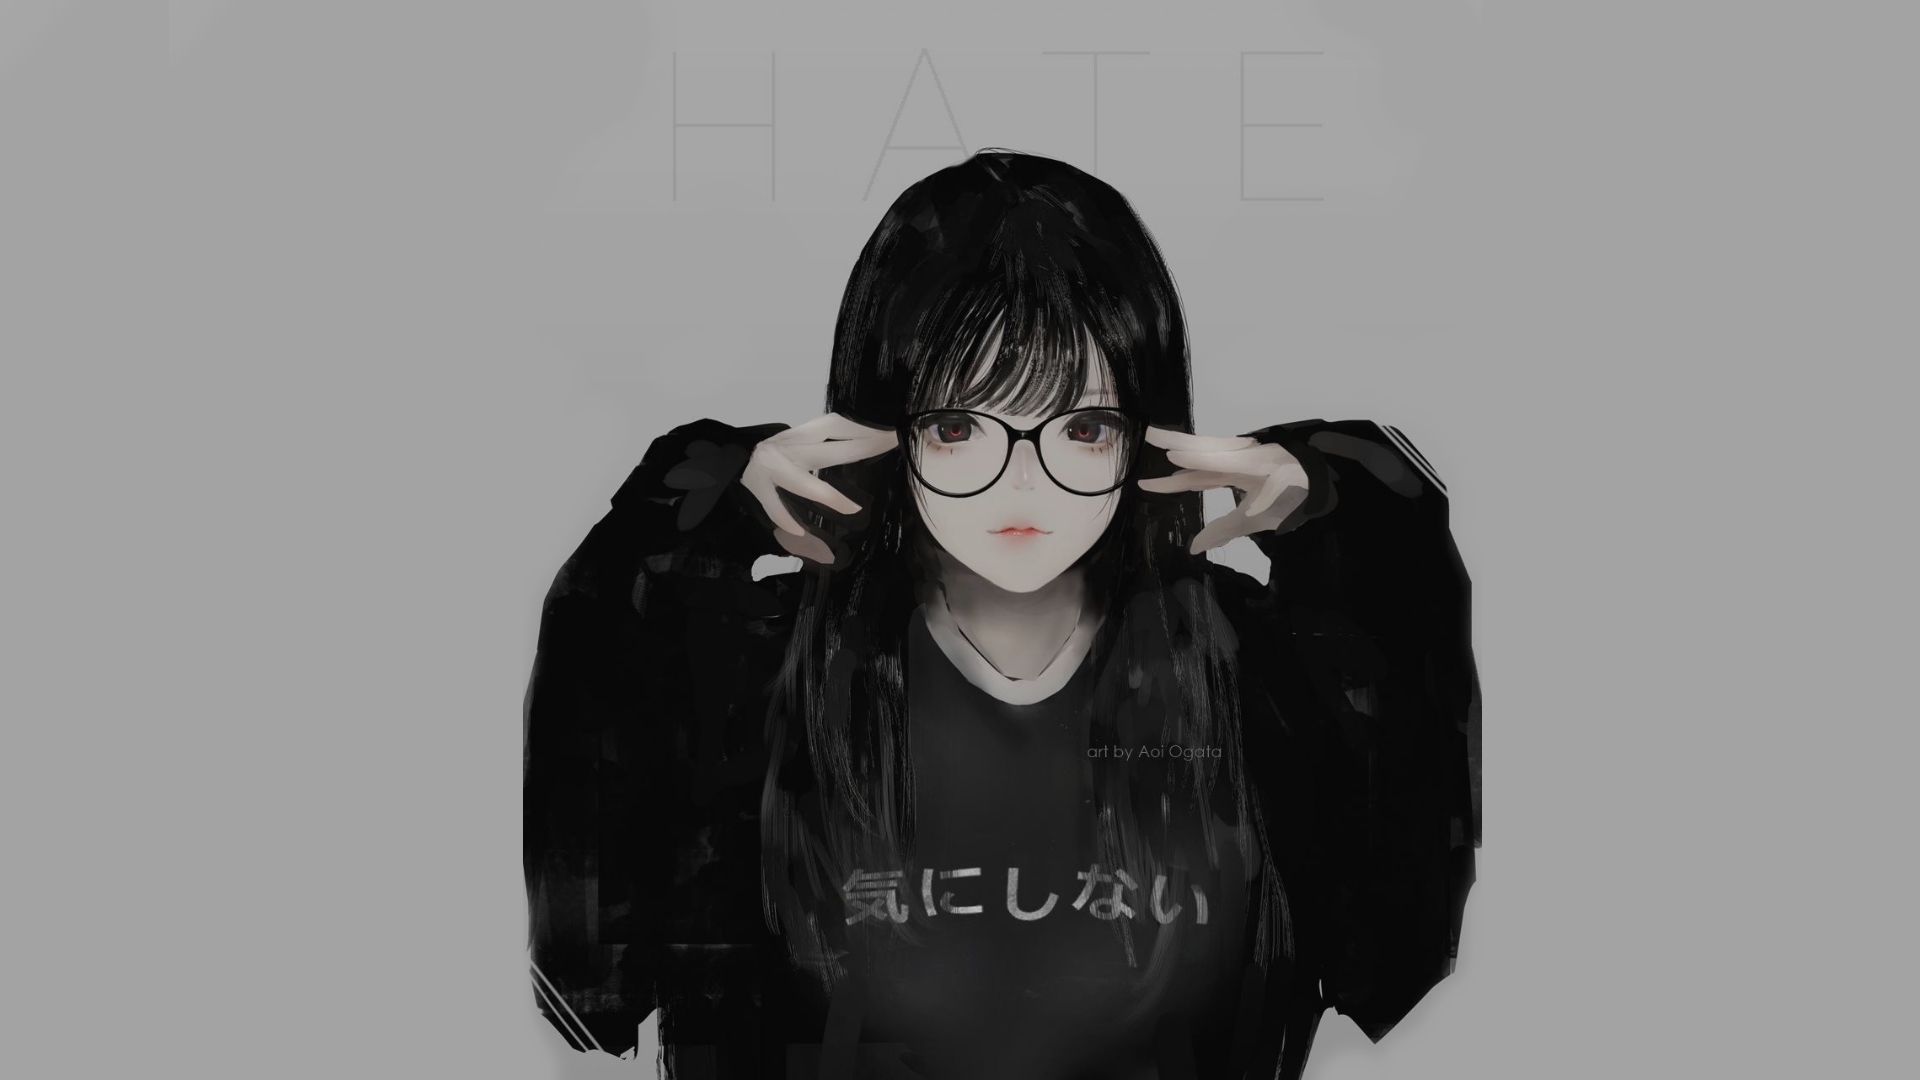 Aoi Ogata Digital Art Artwork Illustration Simple Background Black Clothing Minimalism Hate Chan Wom 1920x1080